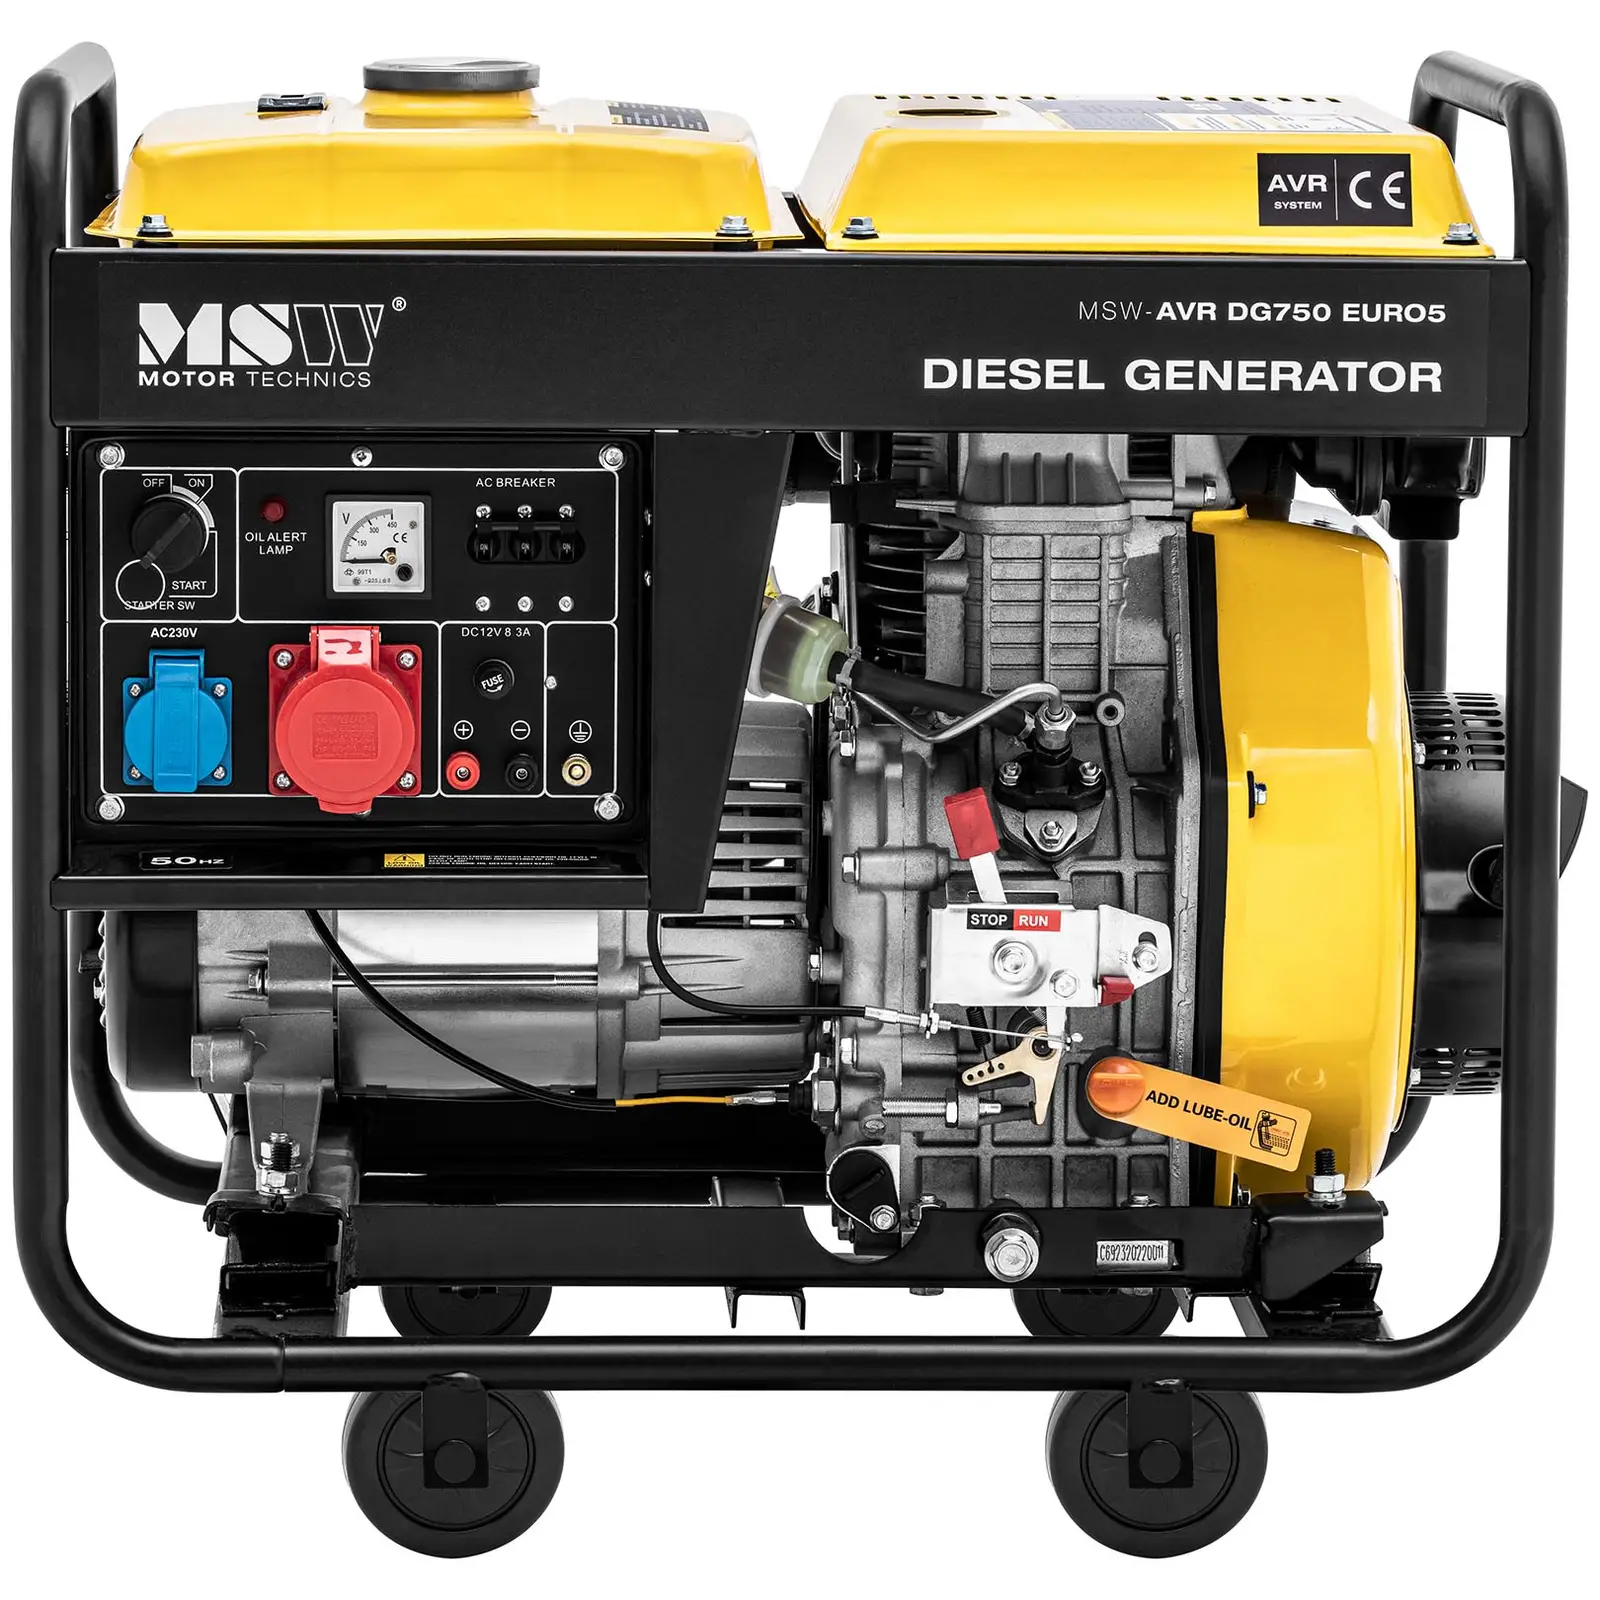 Dieselgenerator -  1650 / 4600 W - 12,5 l - 230/400 V - mobil - AVR - Euro 5